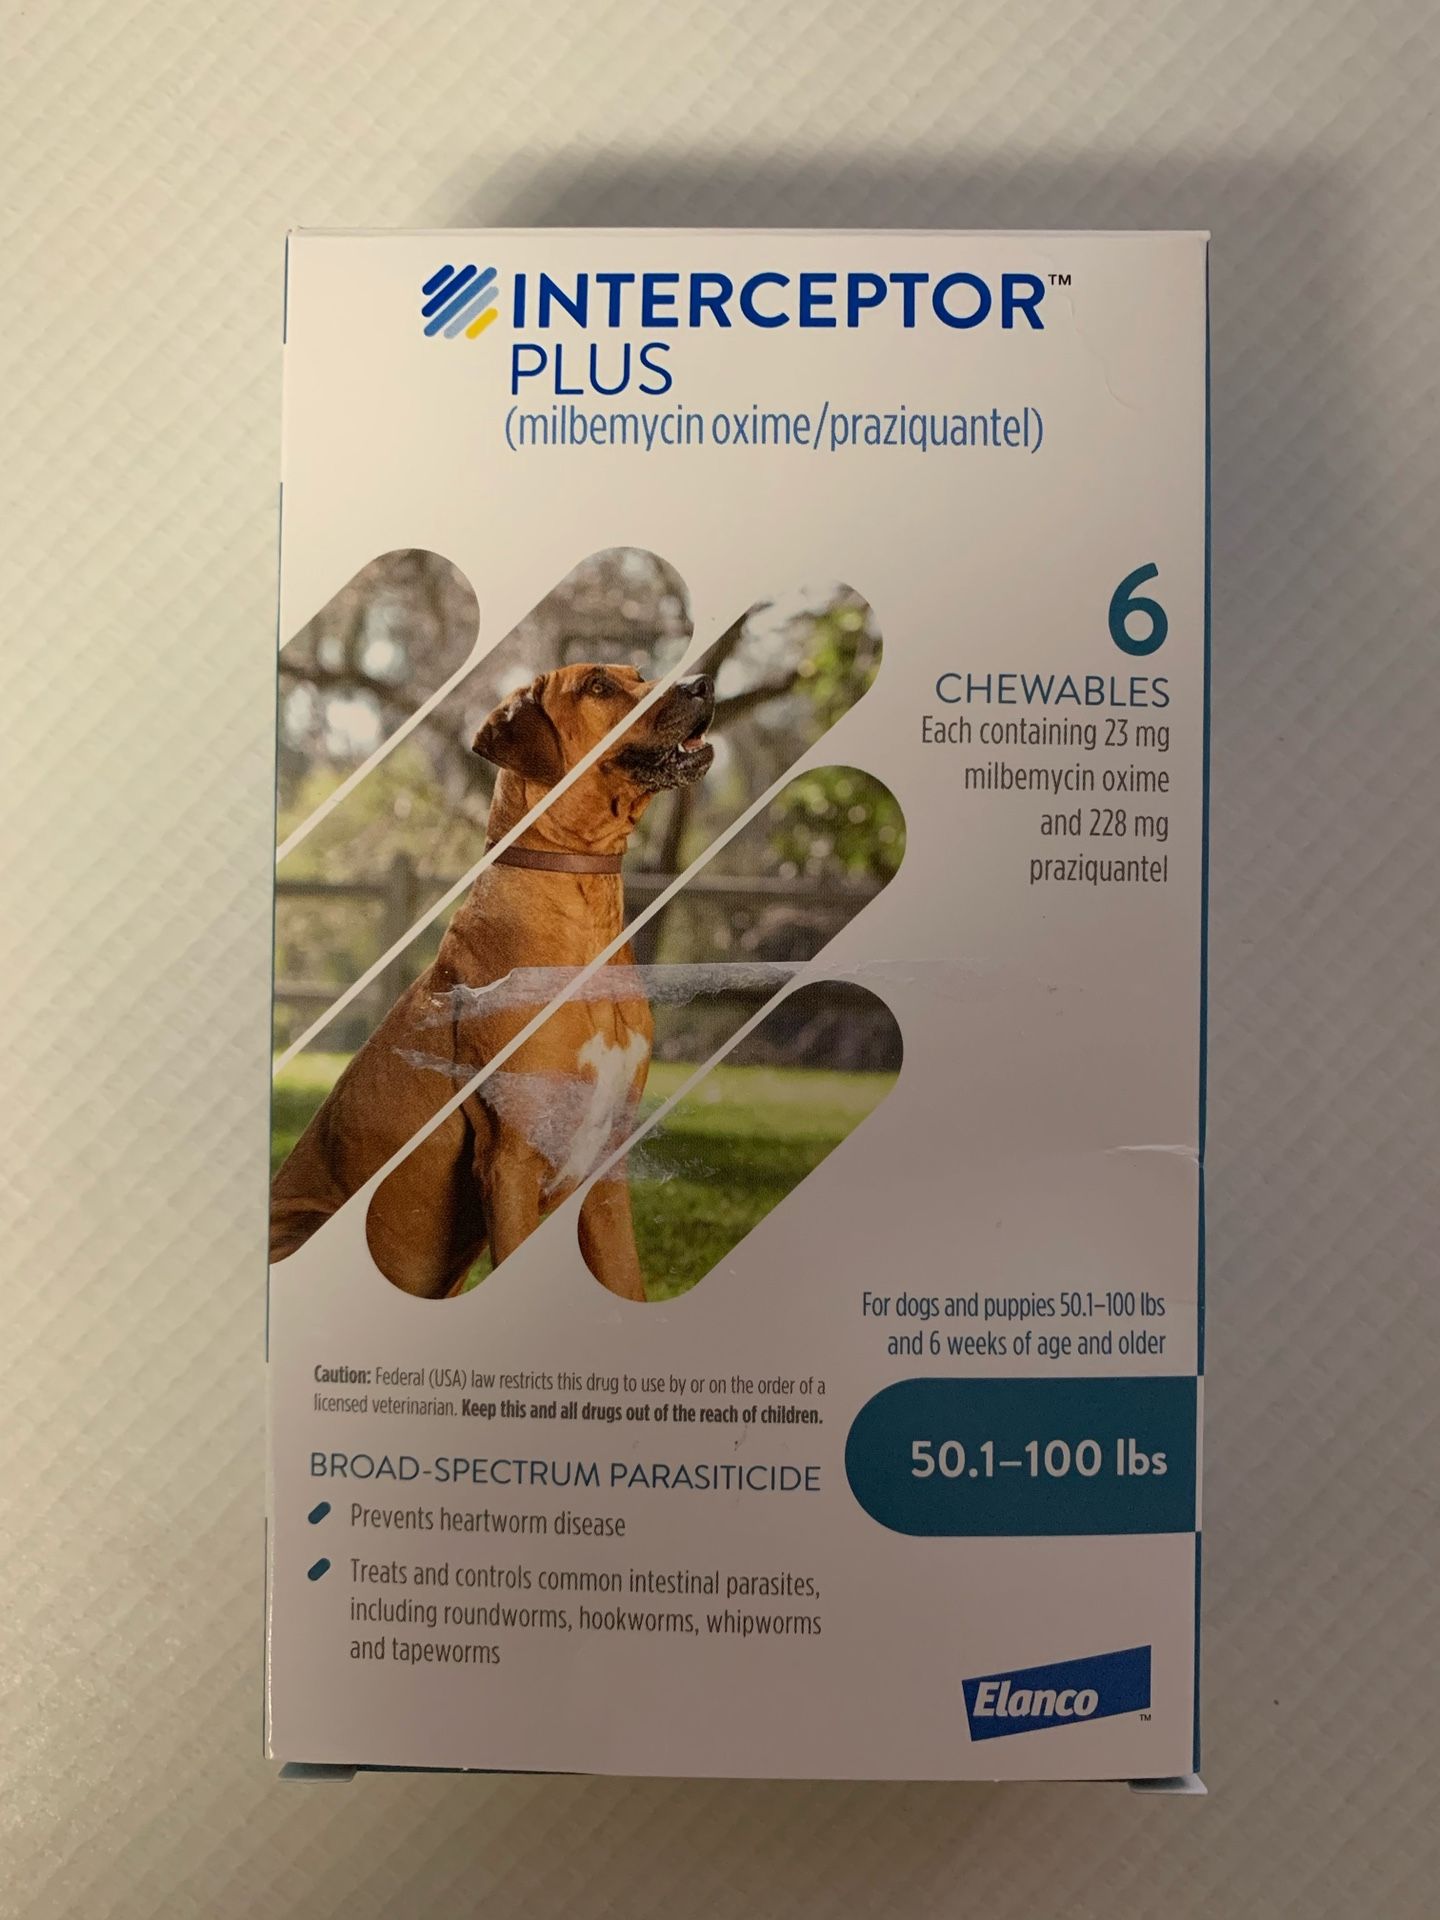 Interceptor Plus heart worm medicine for dogs